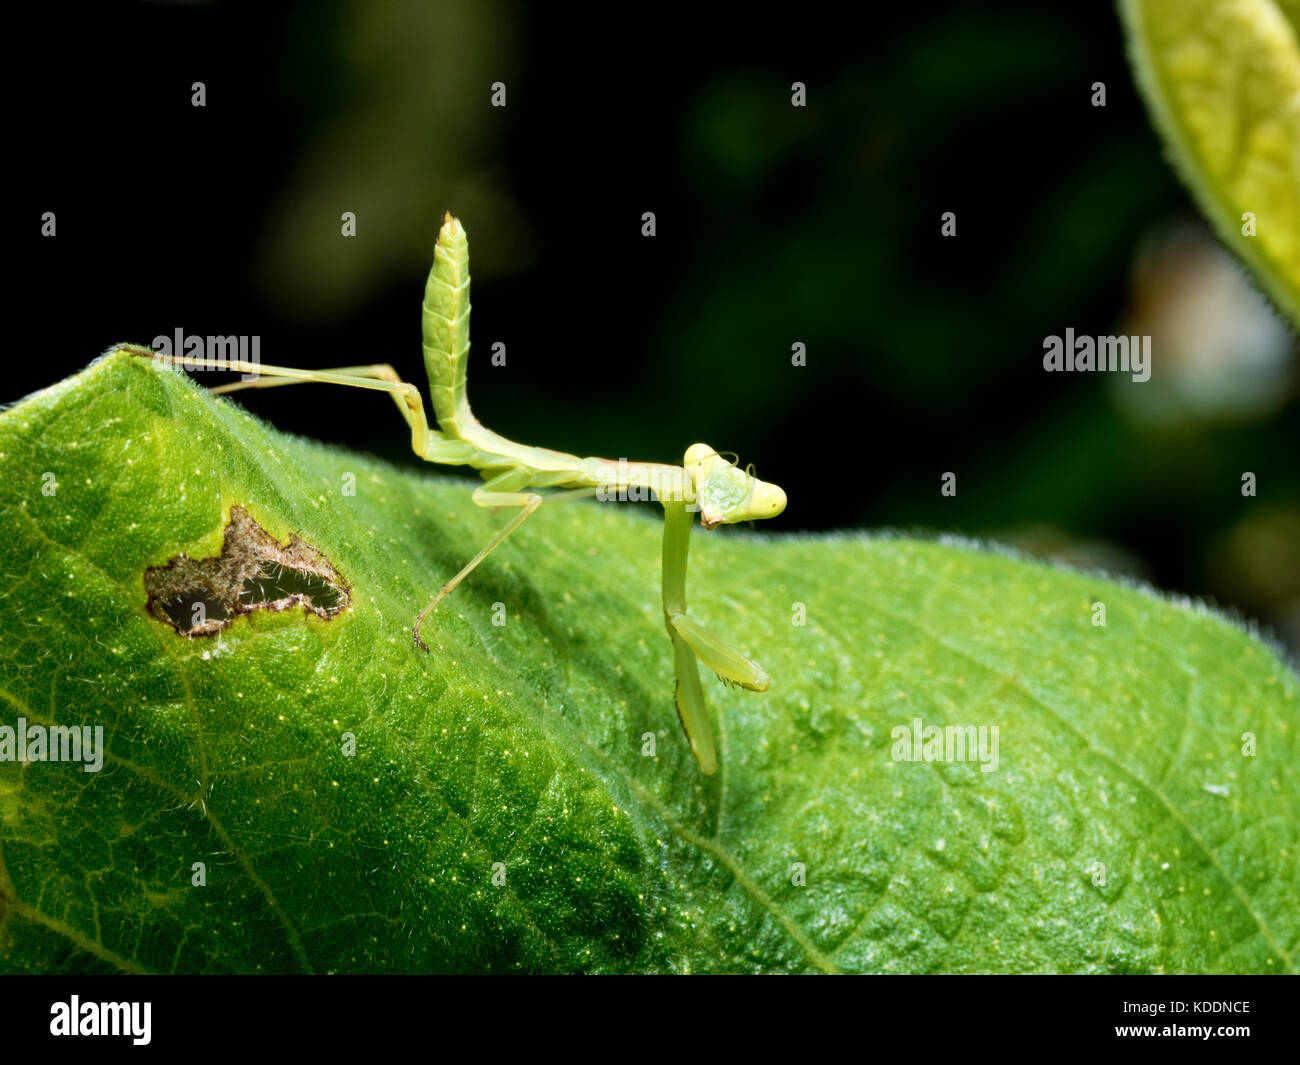 Young Praying Mantis, Mantis religiosa, on leaf Stock Photo